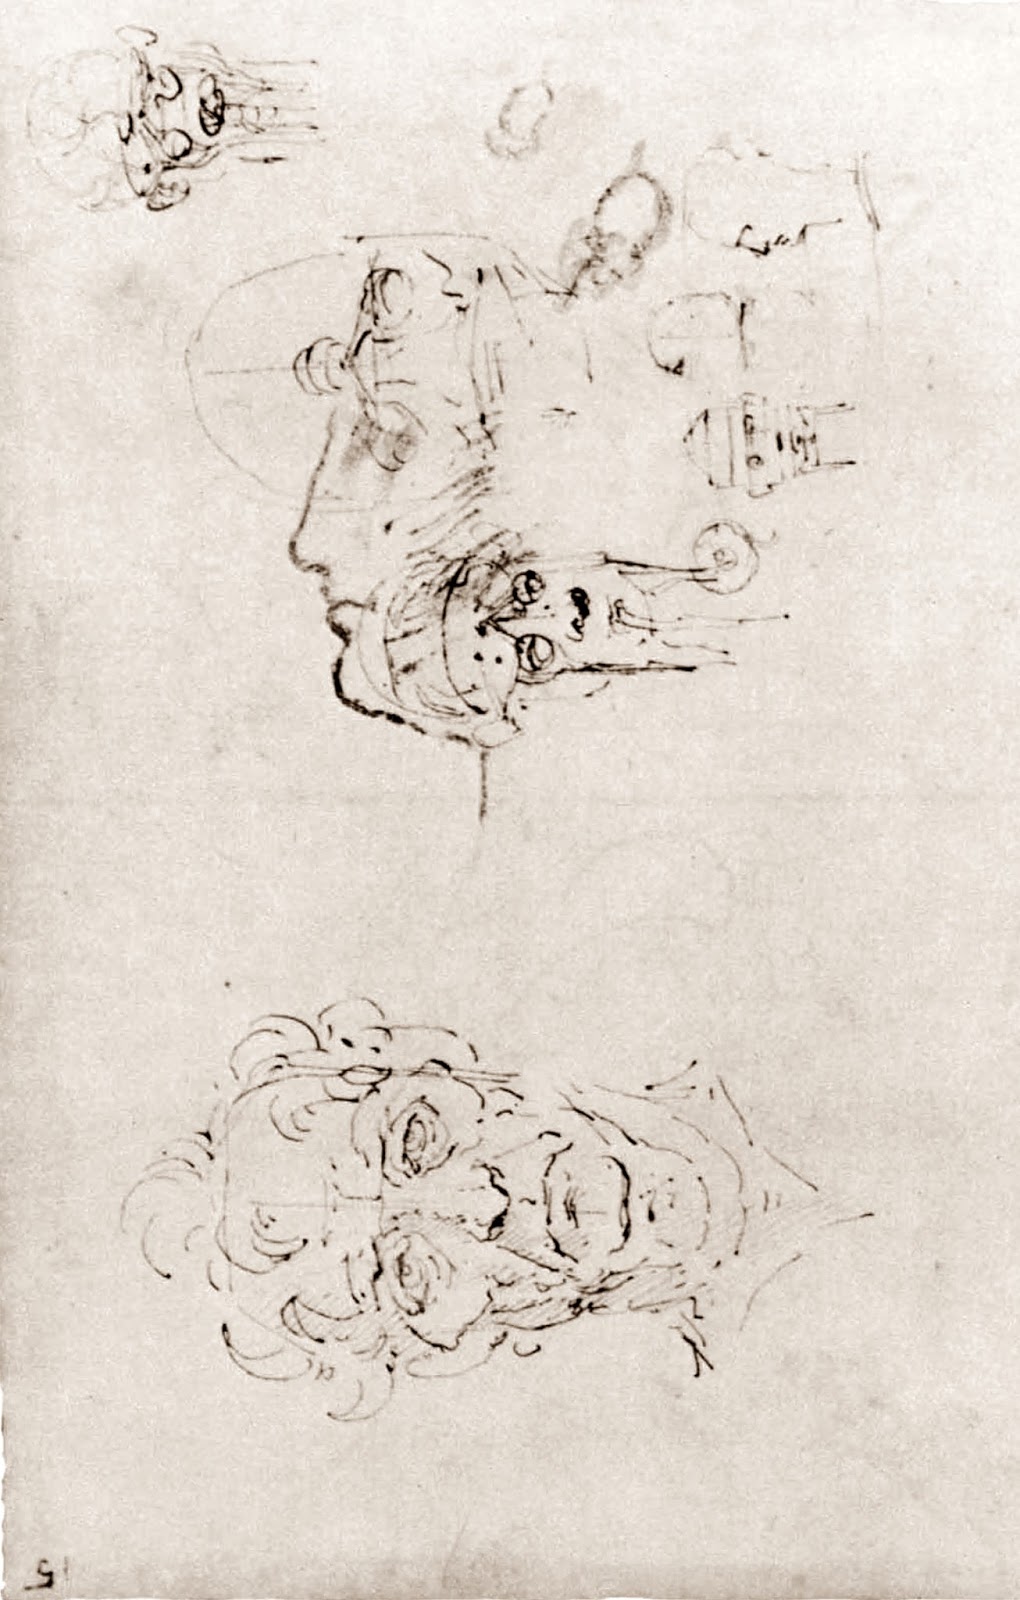 Leonardo+da+Vinci-1452-1519 (762).jpg